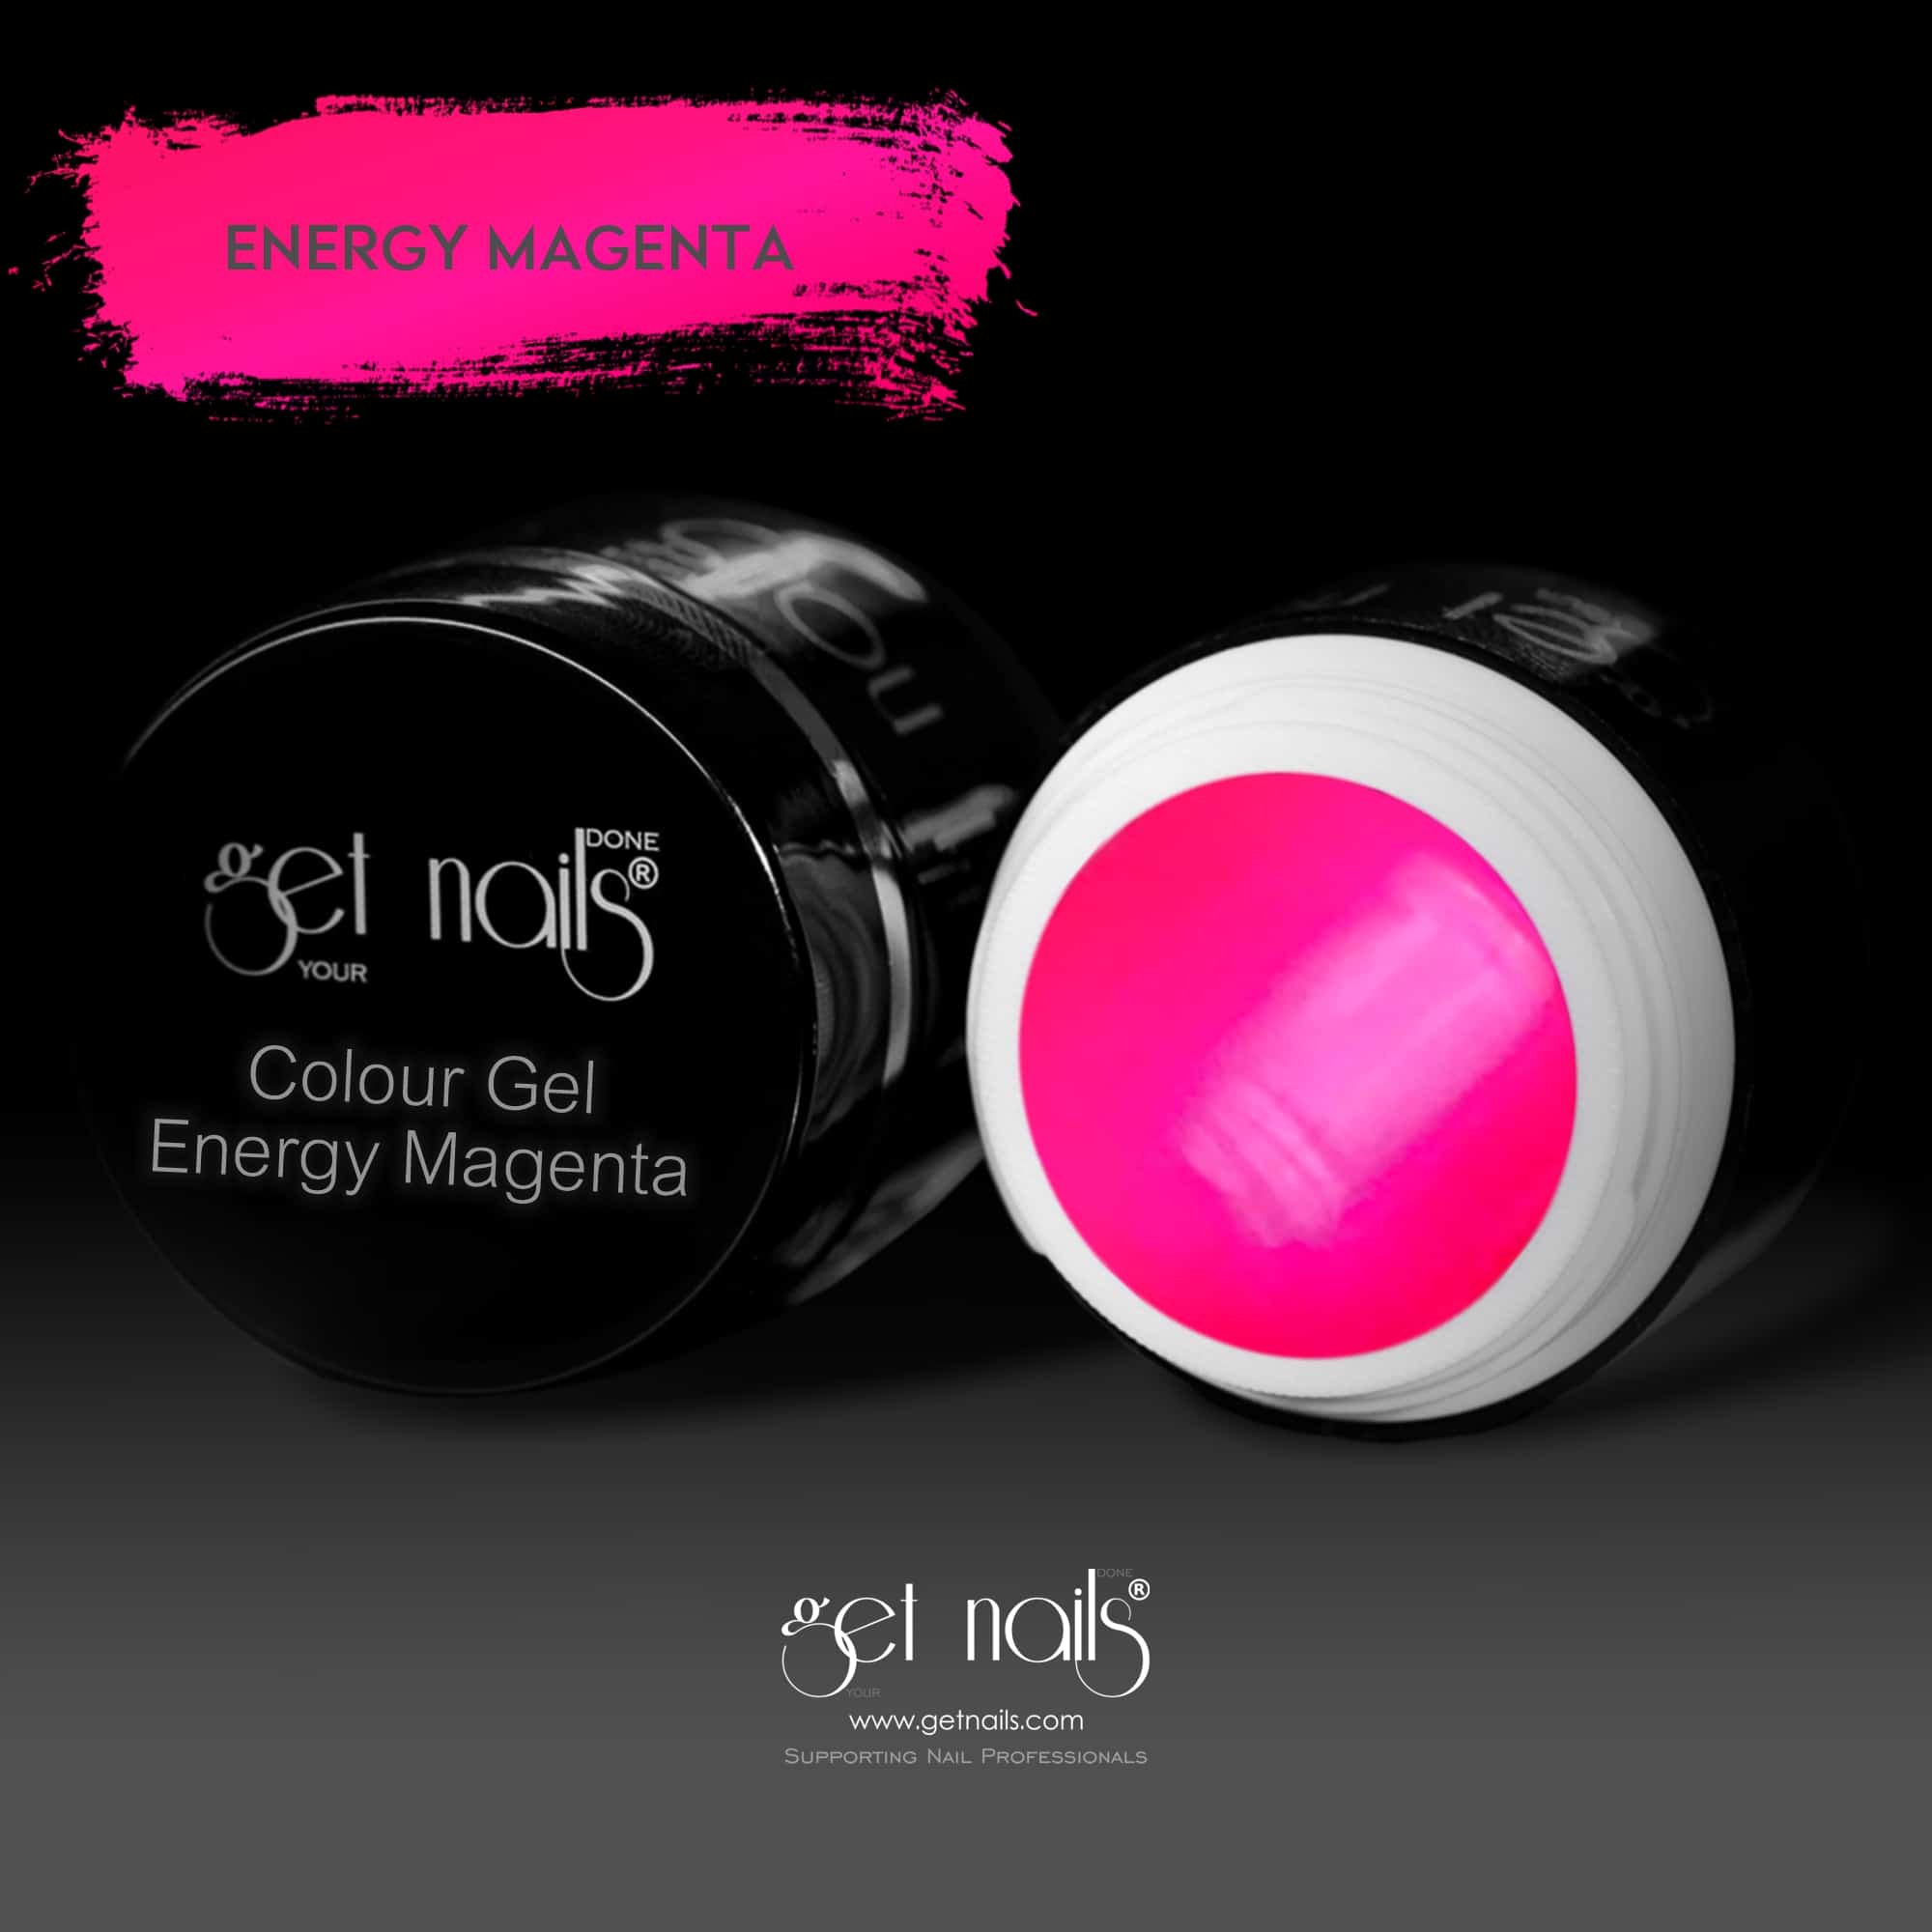 Get Nails Austria - Gel colorato Energy Magenta 5g